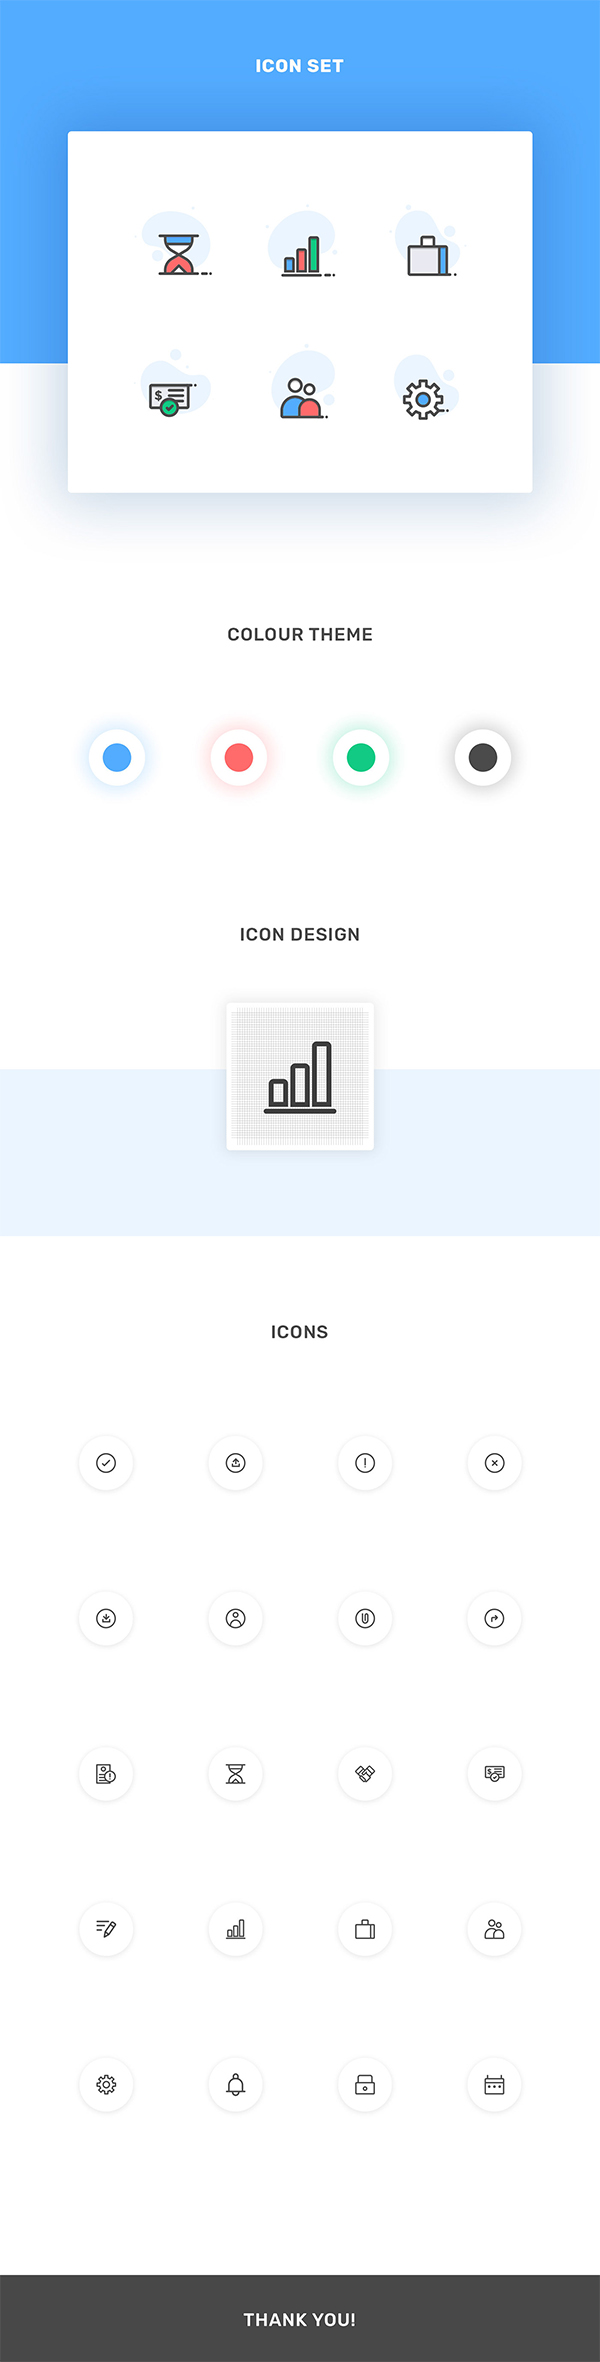 Icon Set - Free Download